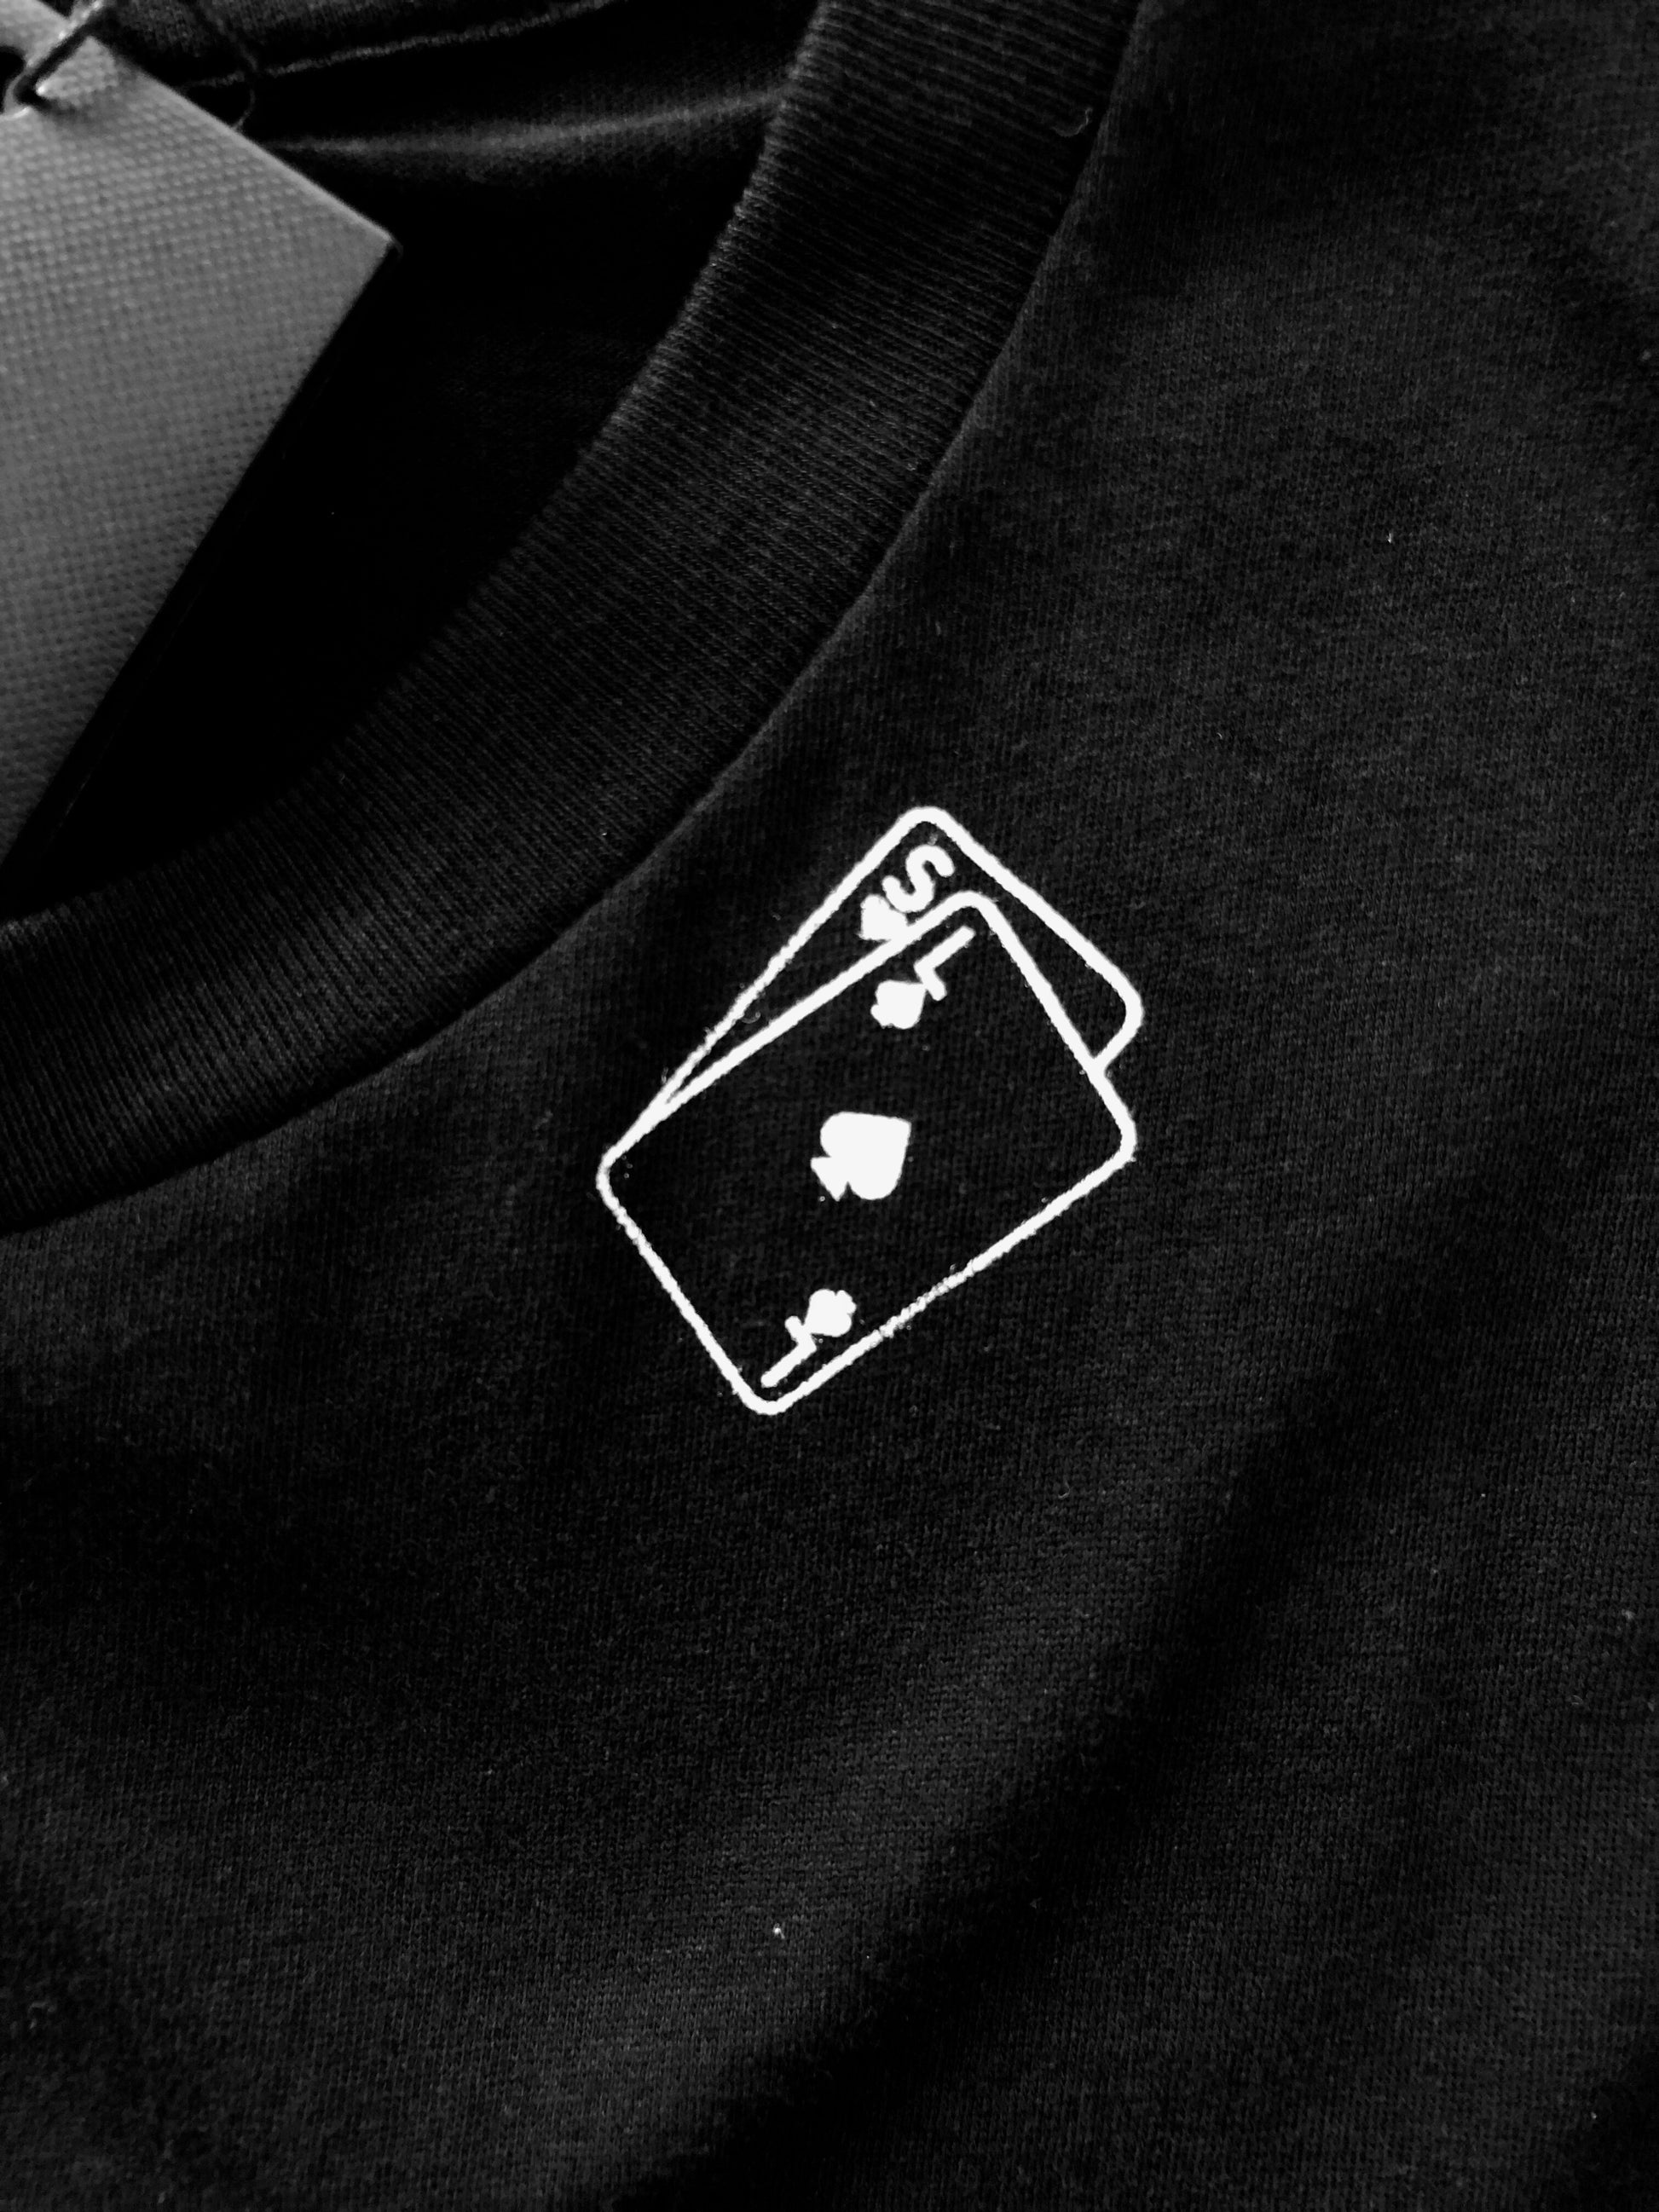 Yves Saint Laurent Playing Card Print Black T-shirt